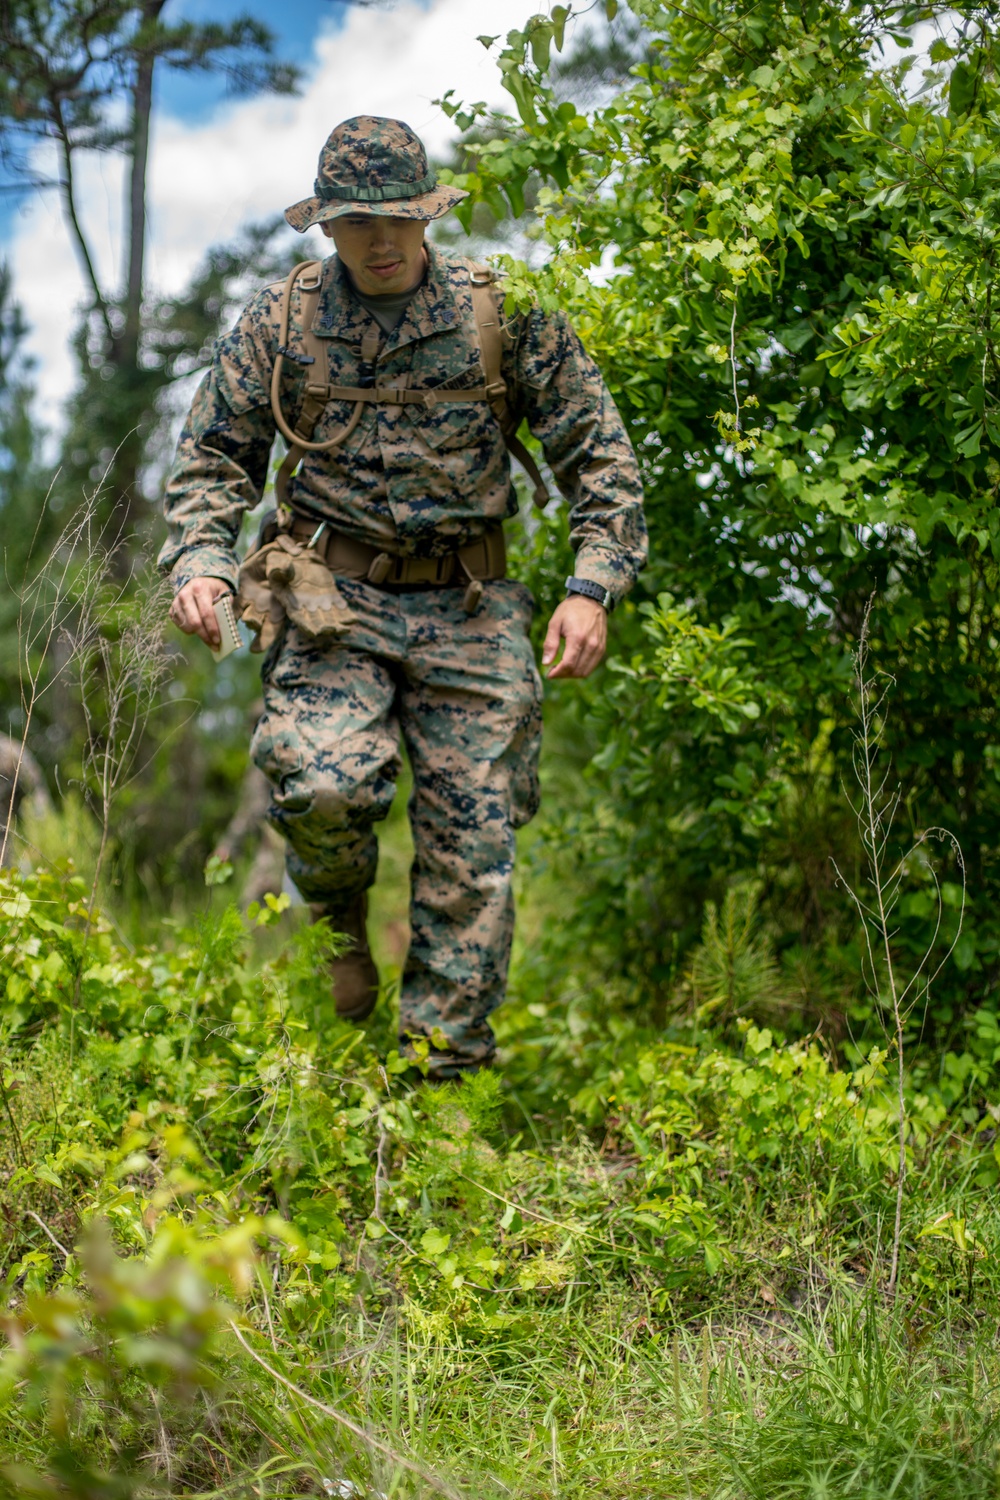 Task force Marines increase unit readiness through land navigation training at Camp Lejeune